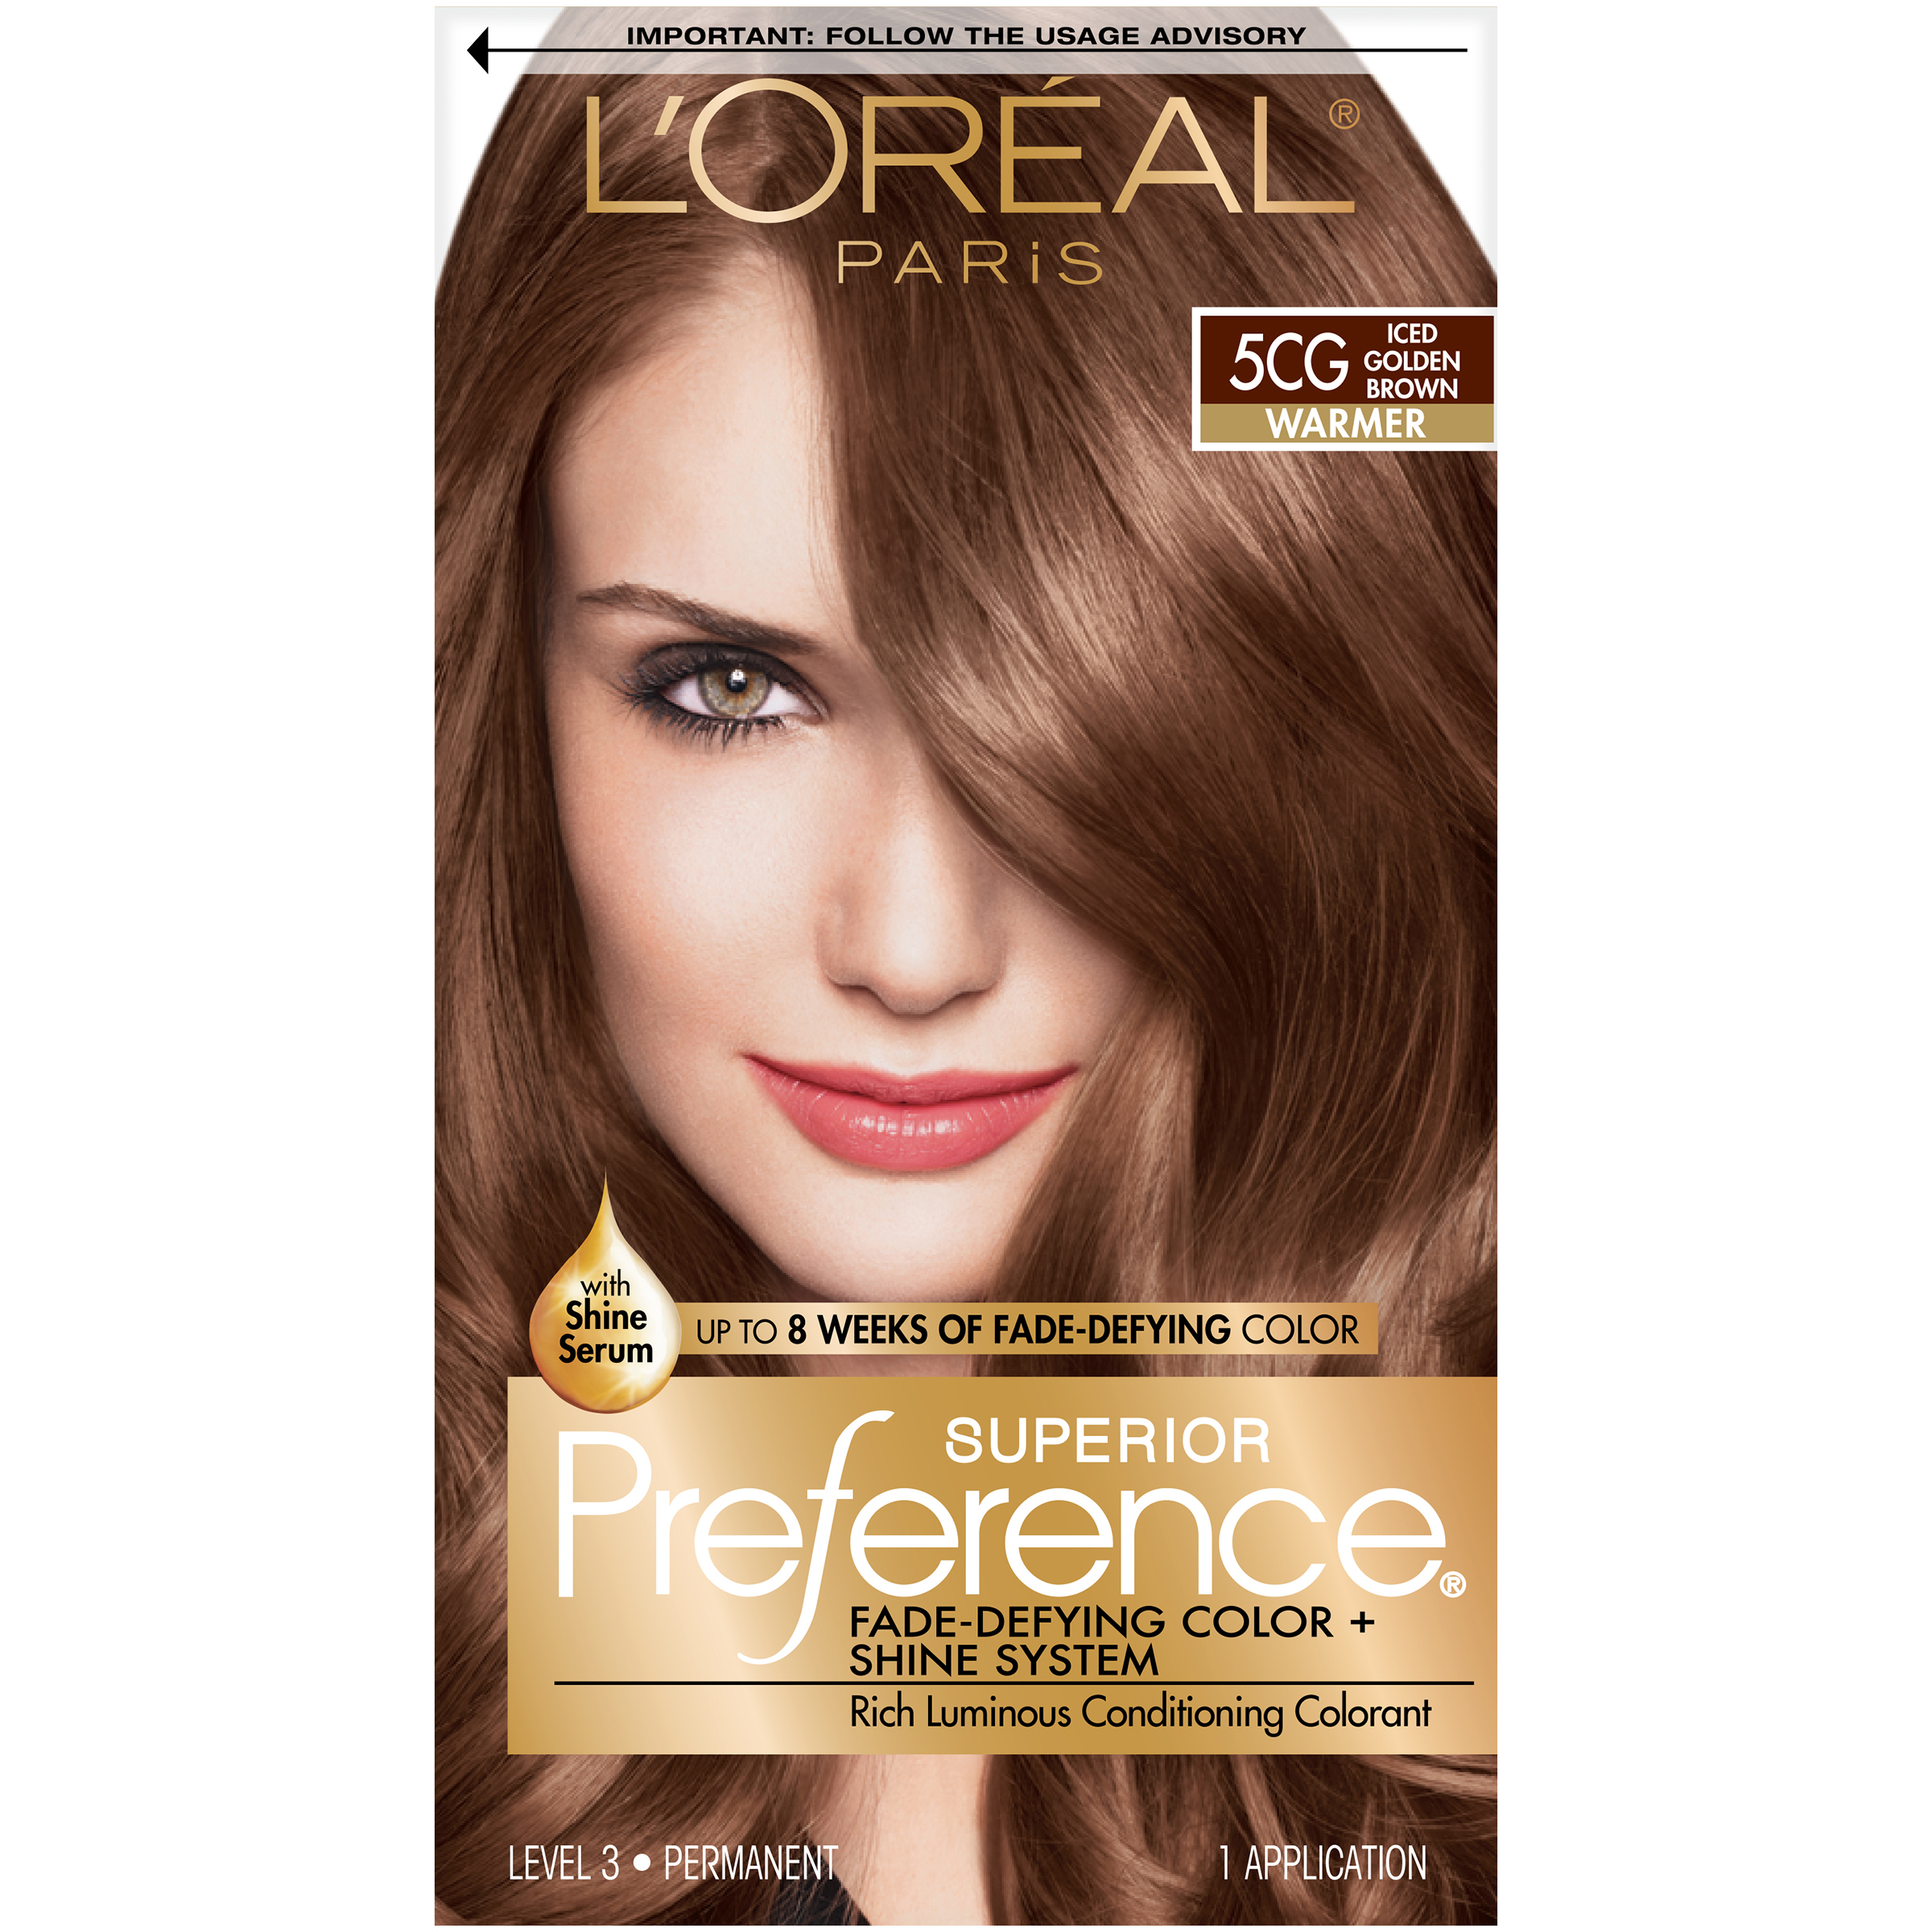 LOreal Warmer 5CG Iced Golden Brown Hair Color Beauty Hair